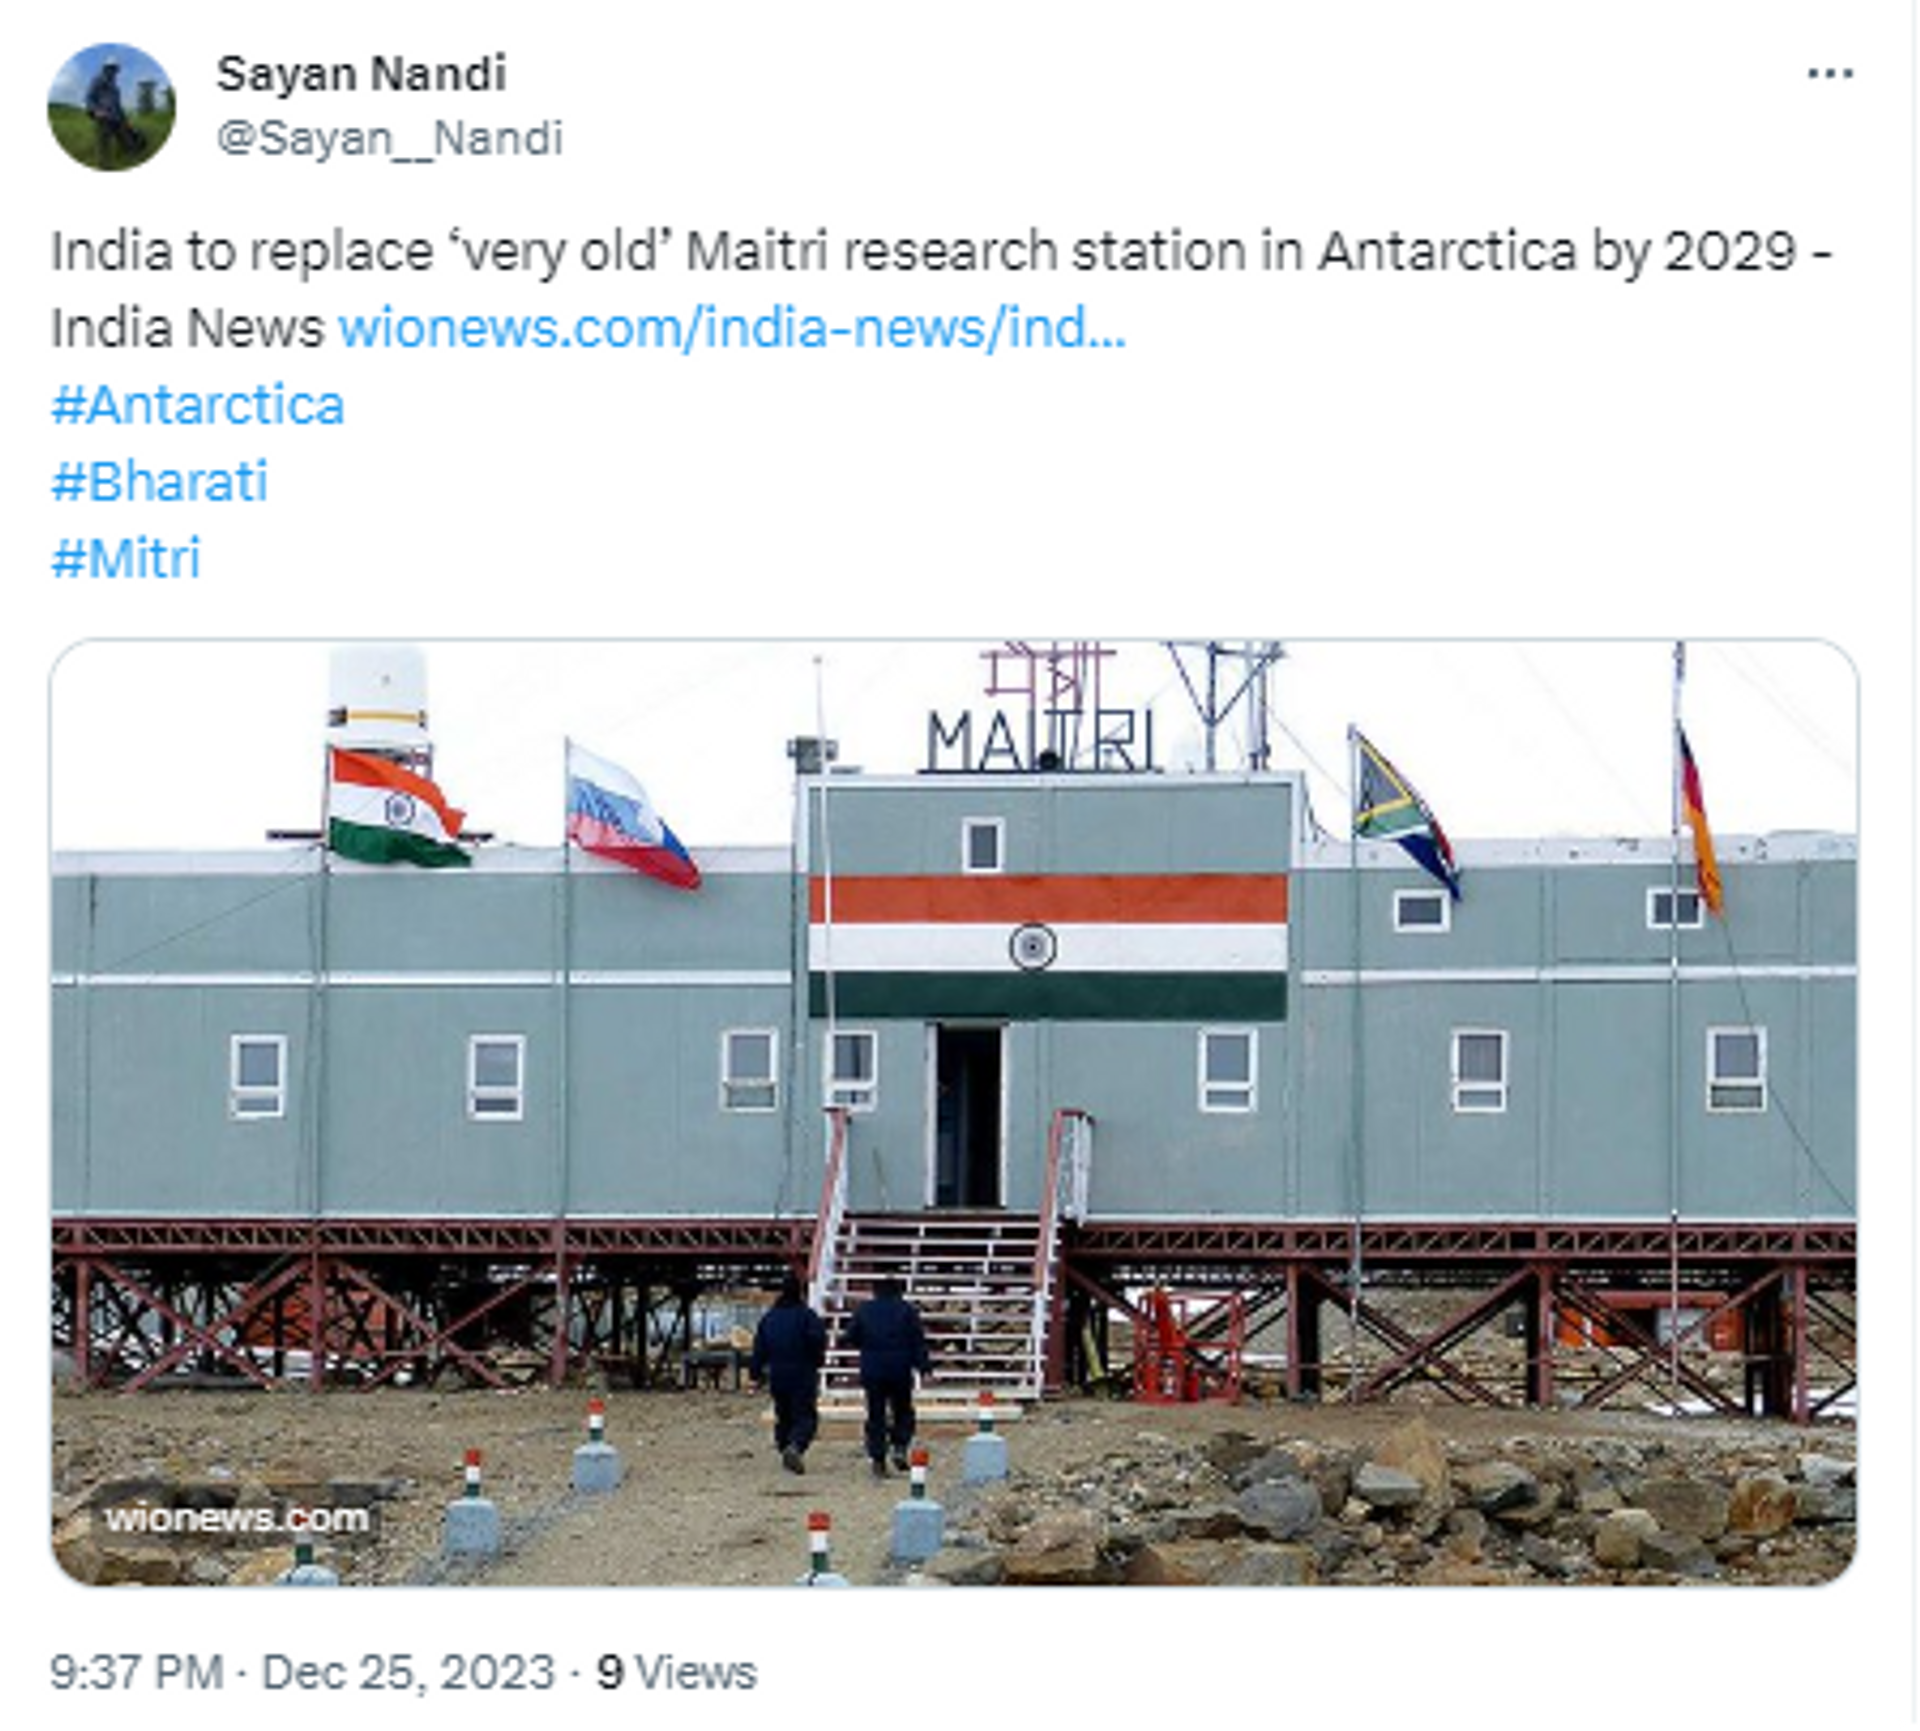 Maitri-II Research Station Identified in Antarctica, Operations to Begin in 2029 - Sputnik India, 1920, 26.12.2023